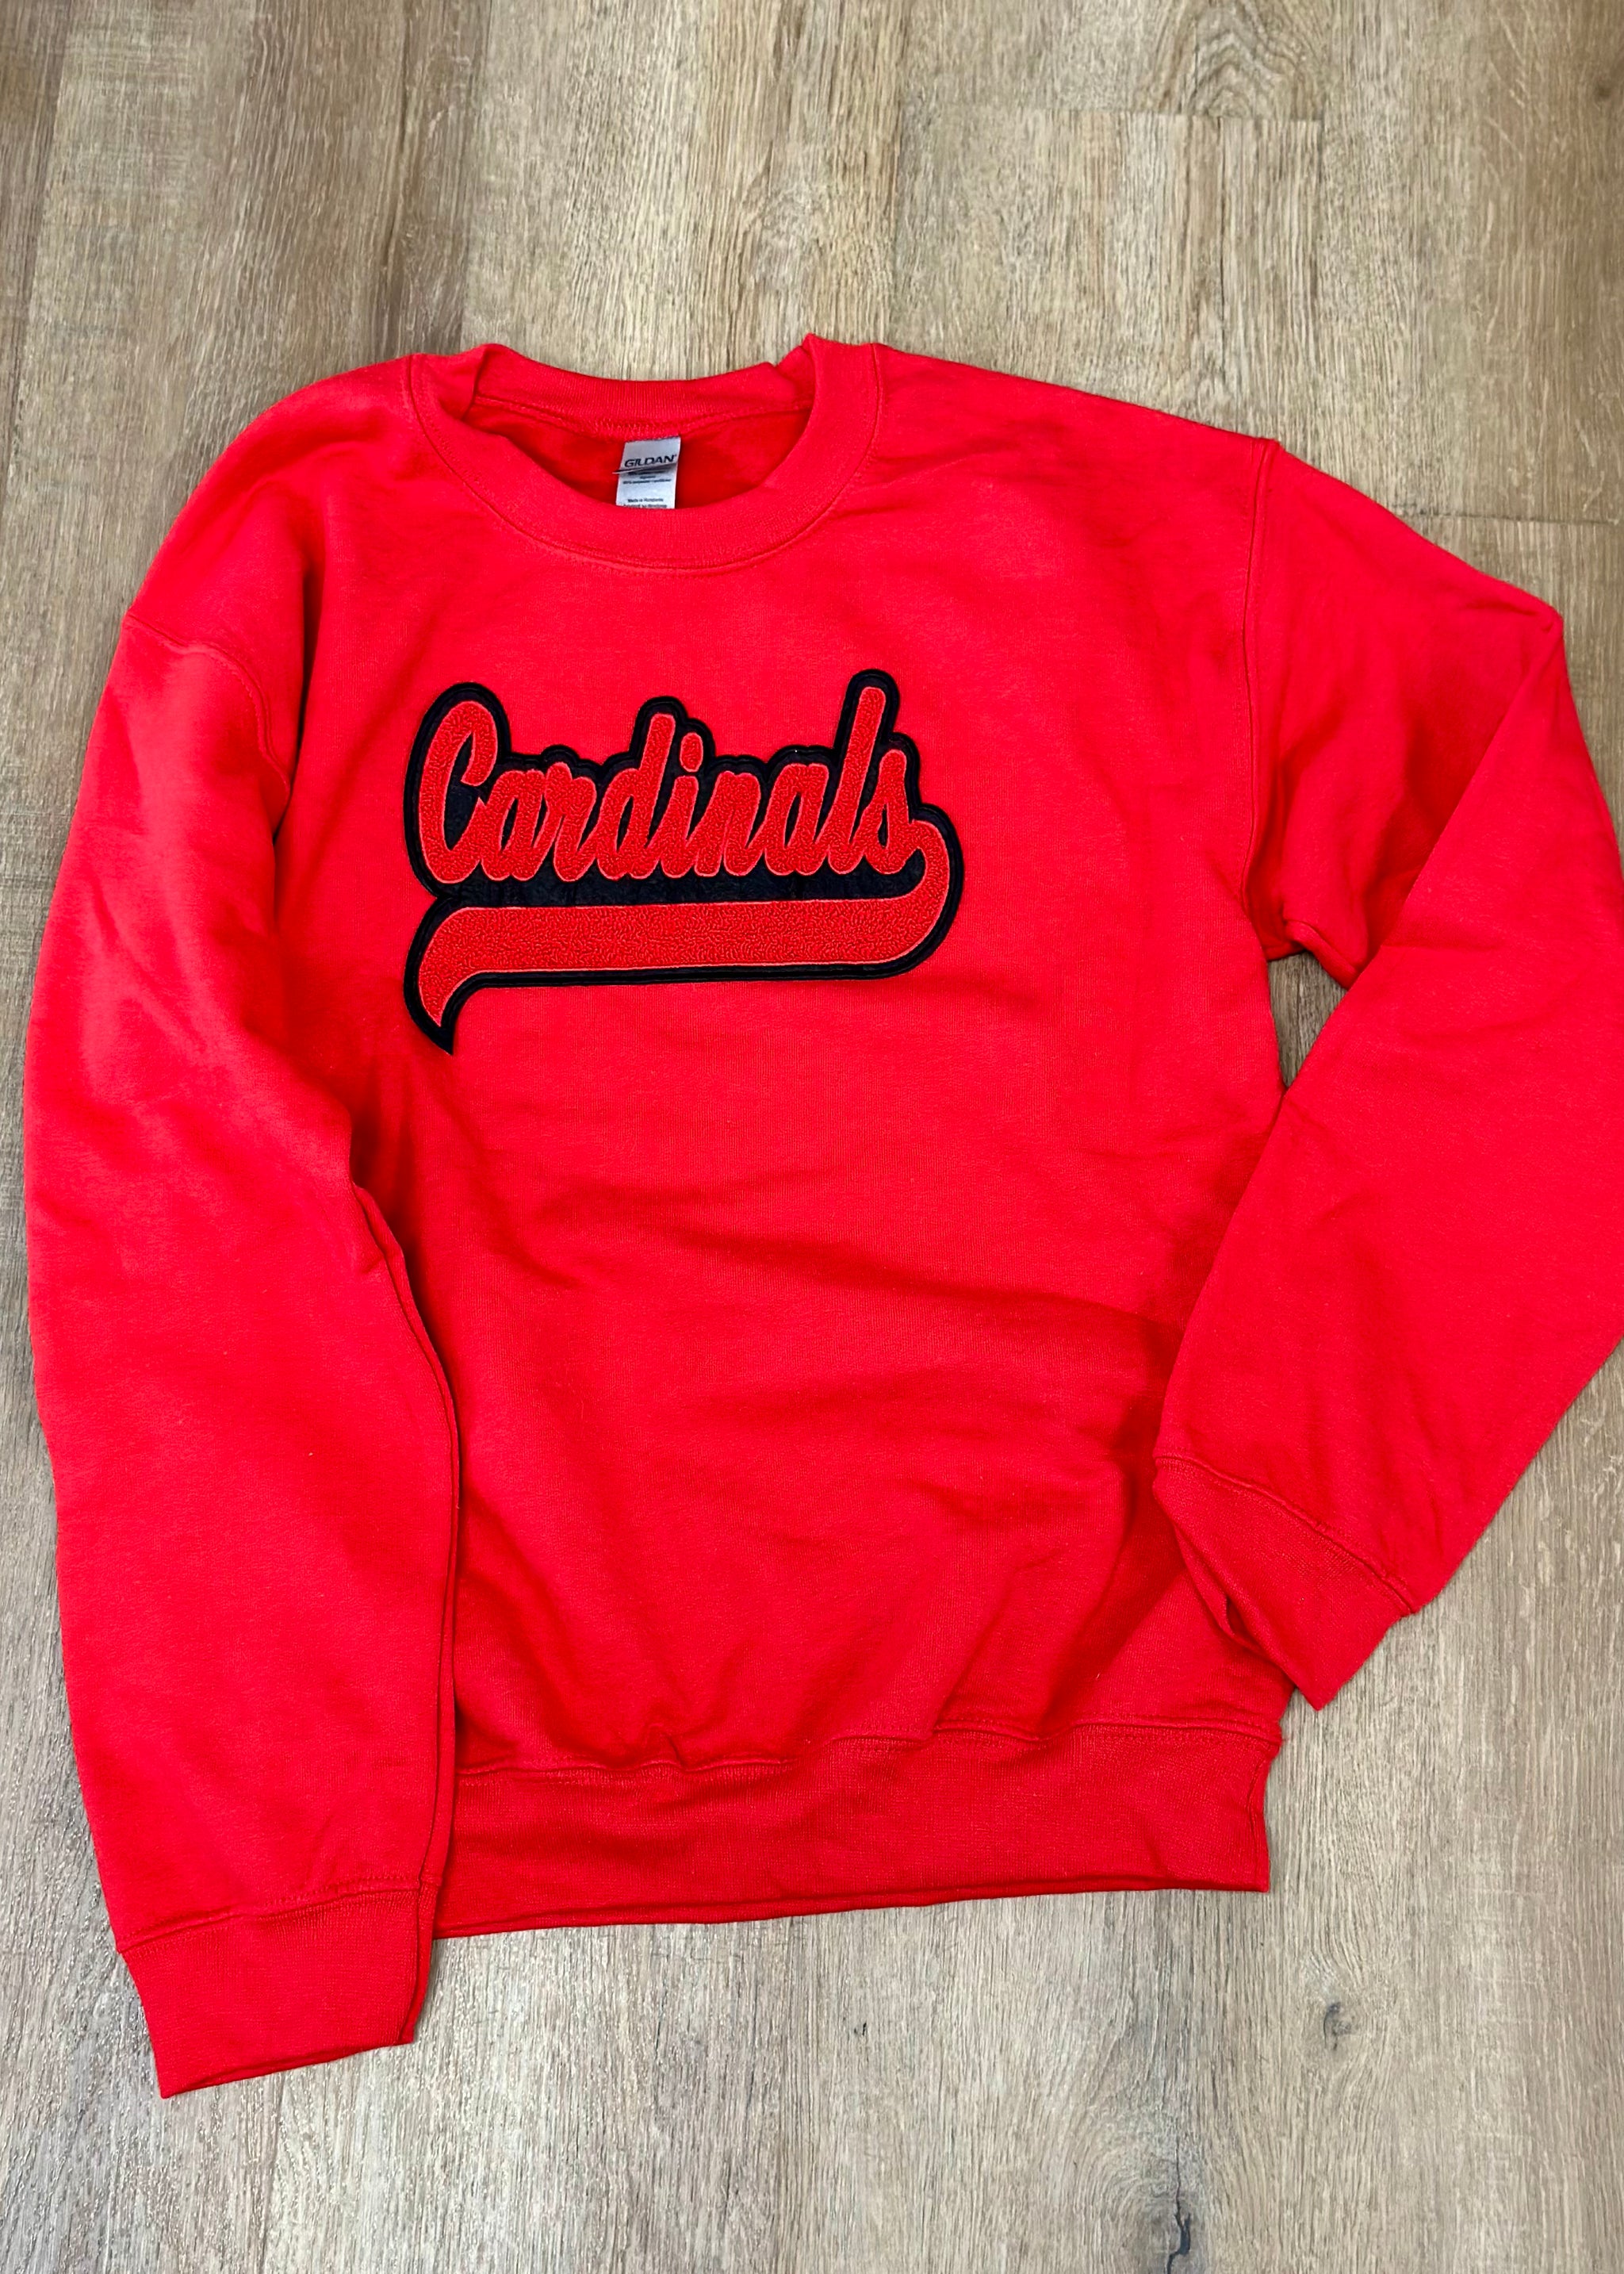 B3 Boutique, LLC Red Cardinals Sweatshirt Small